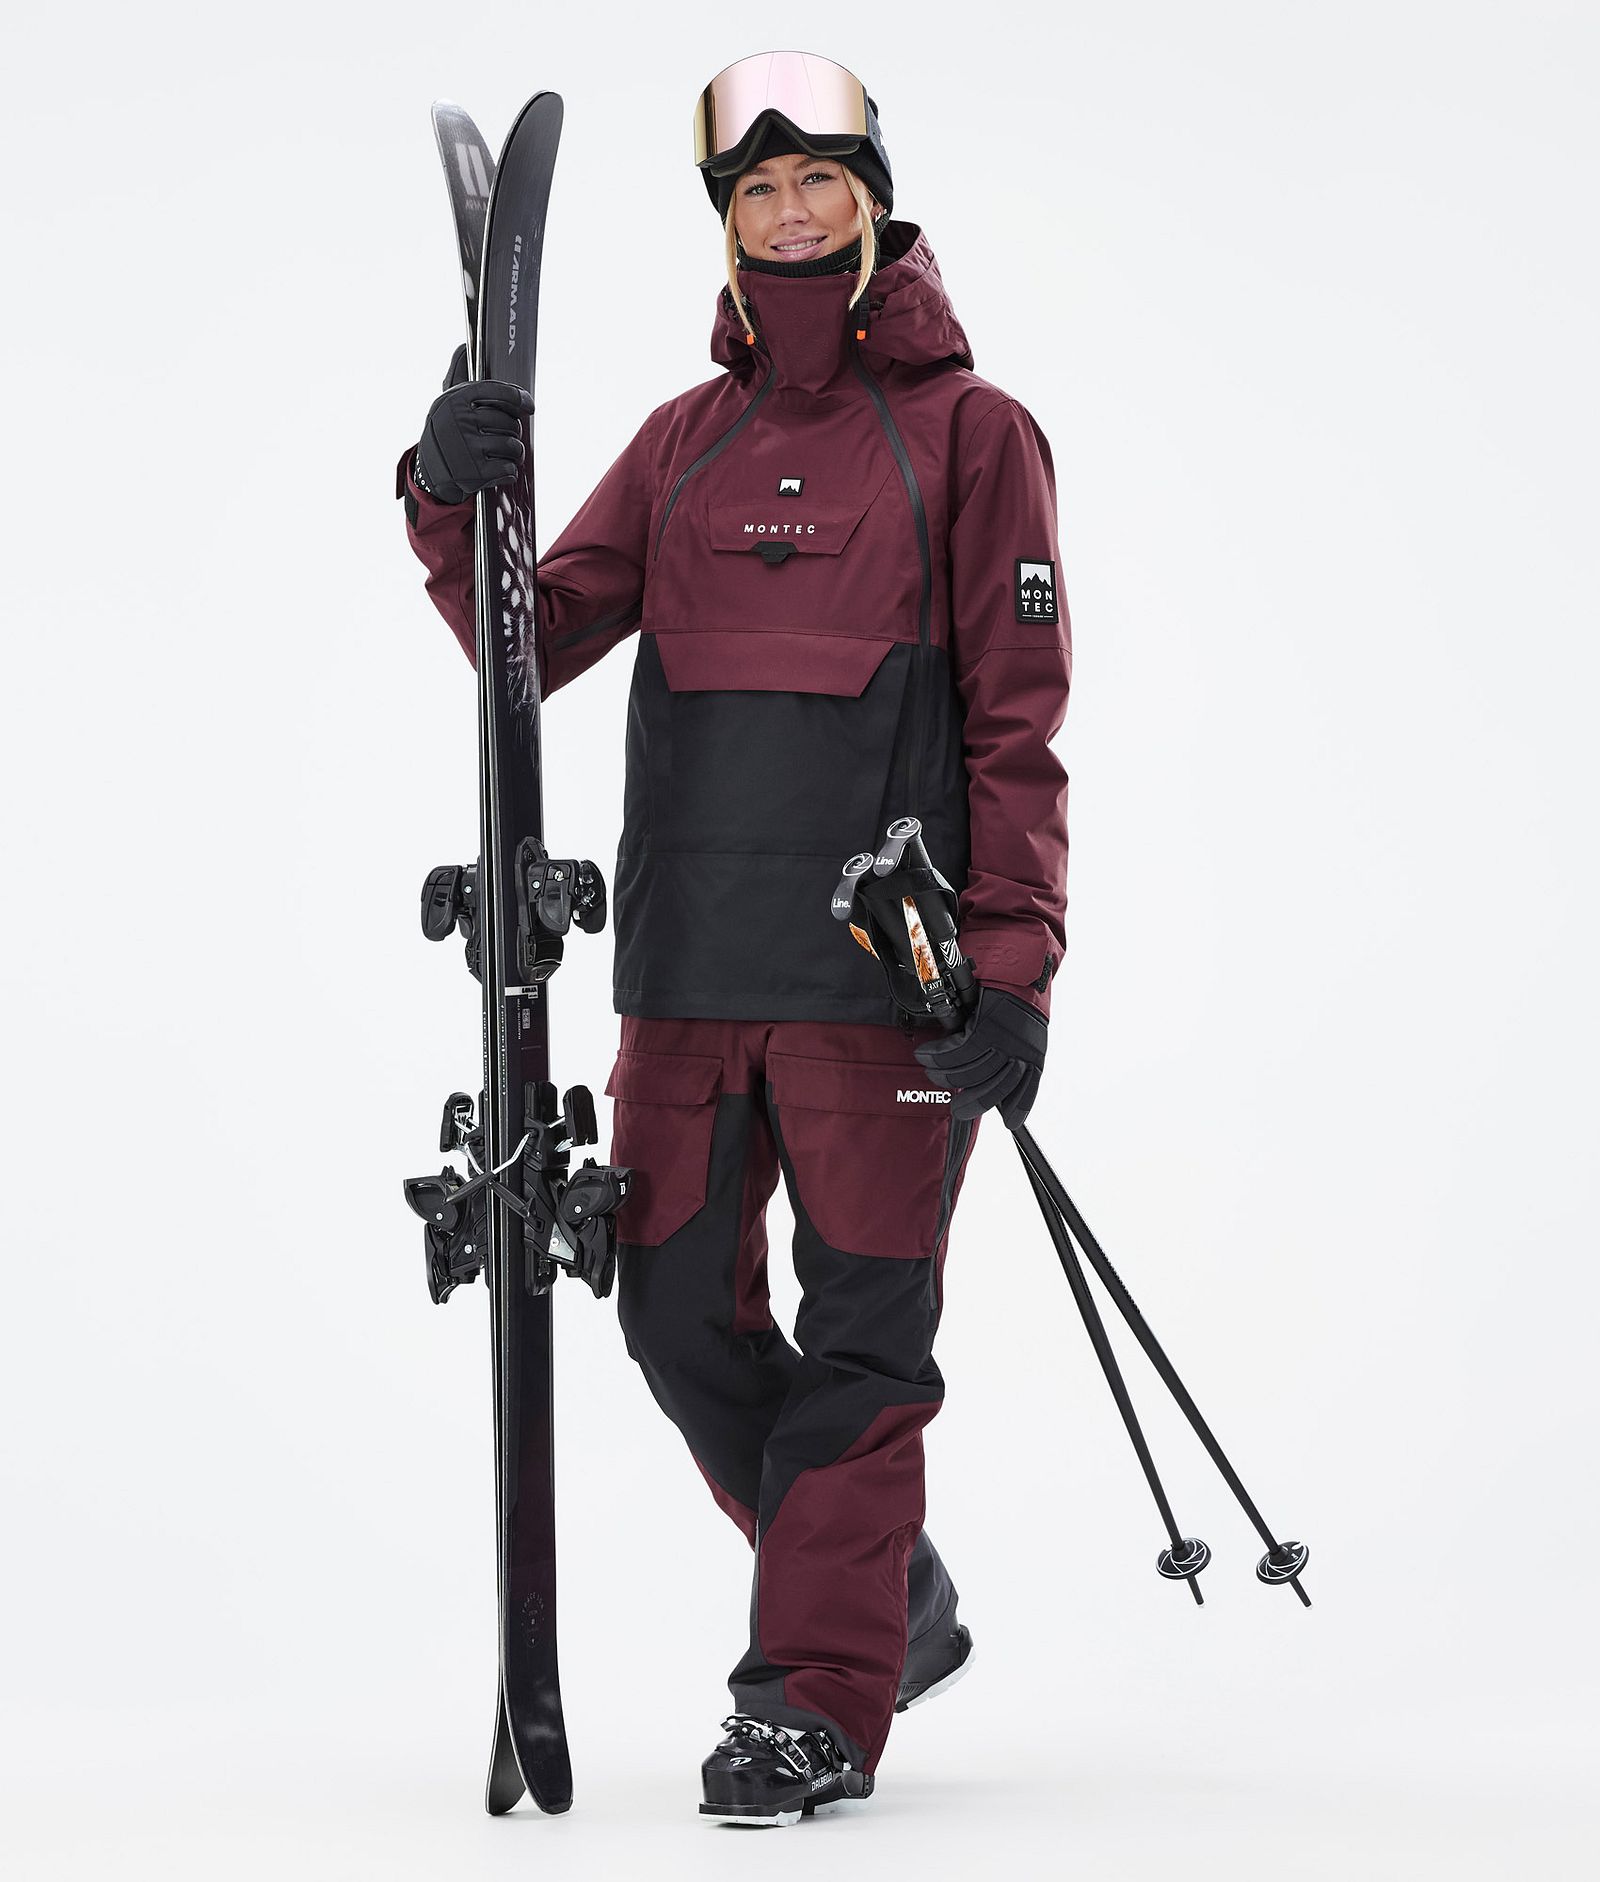 Montec Doom W Ski Outfit Dames Burgundy/Black